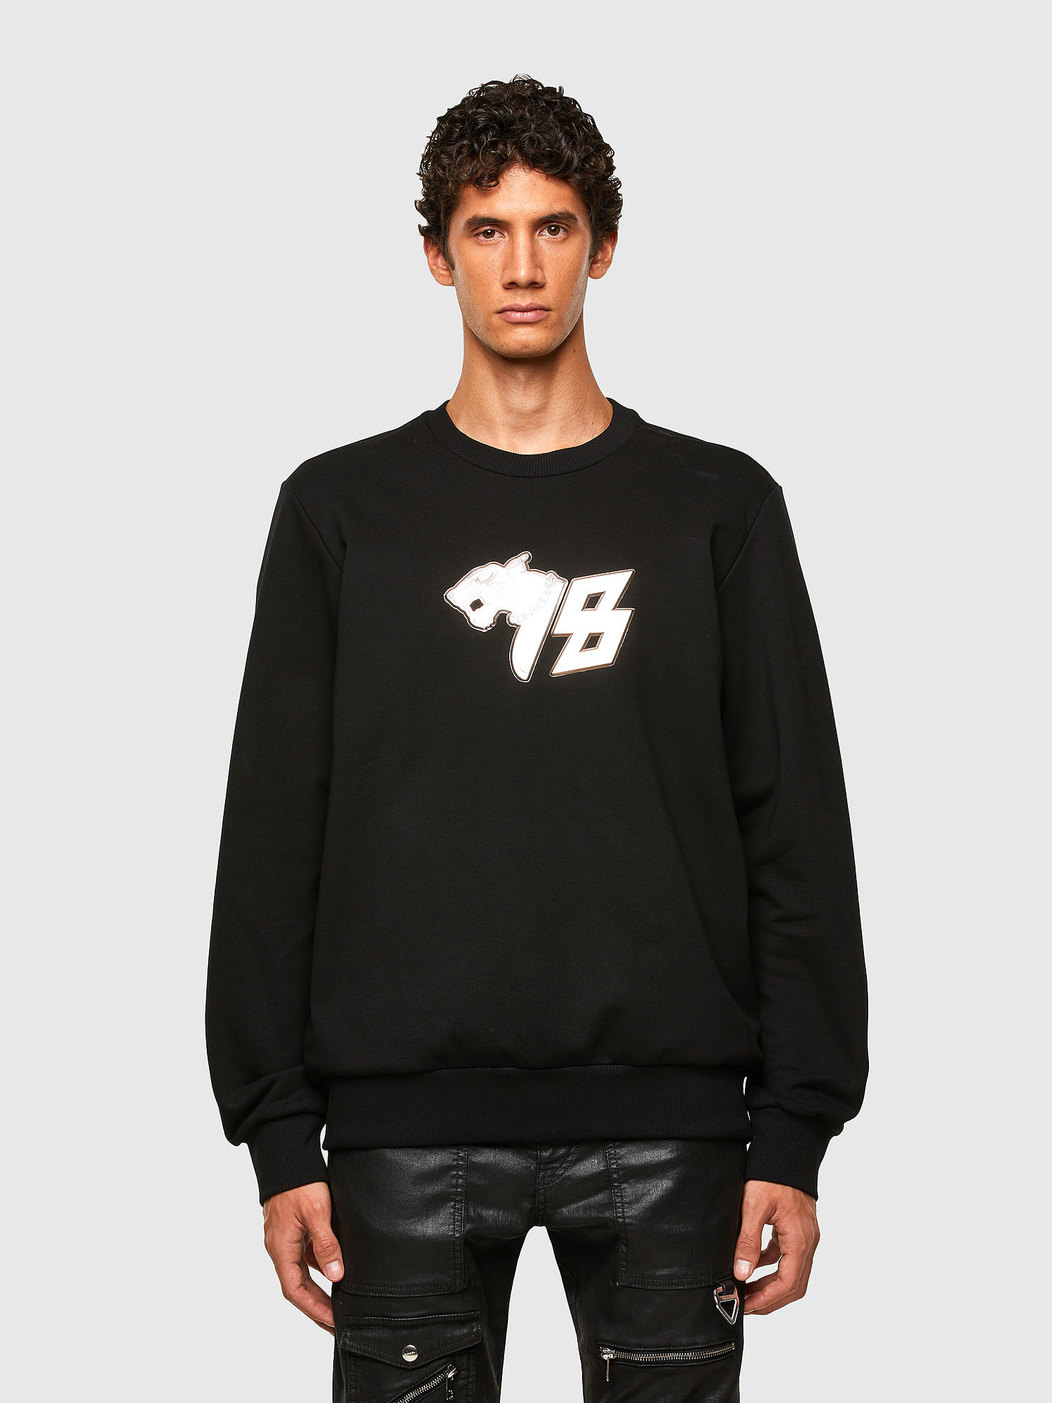 Sweatshirt With 78 Panther Print